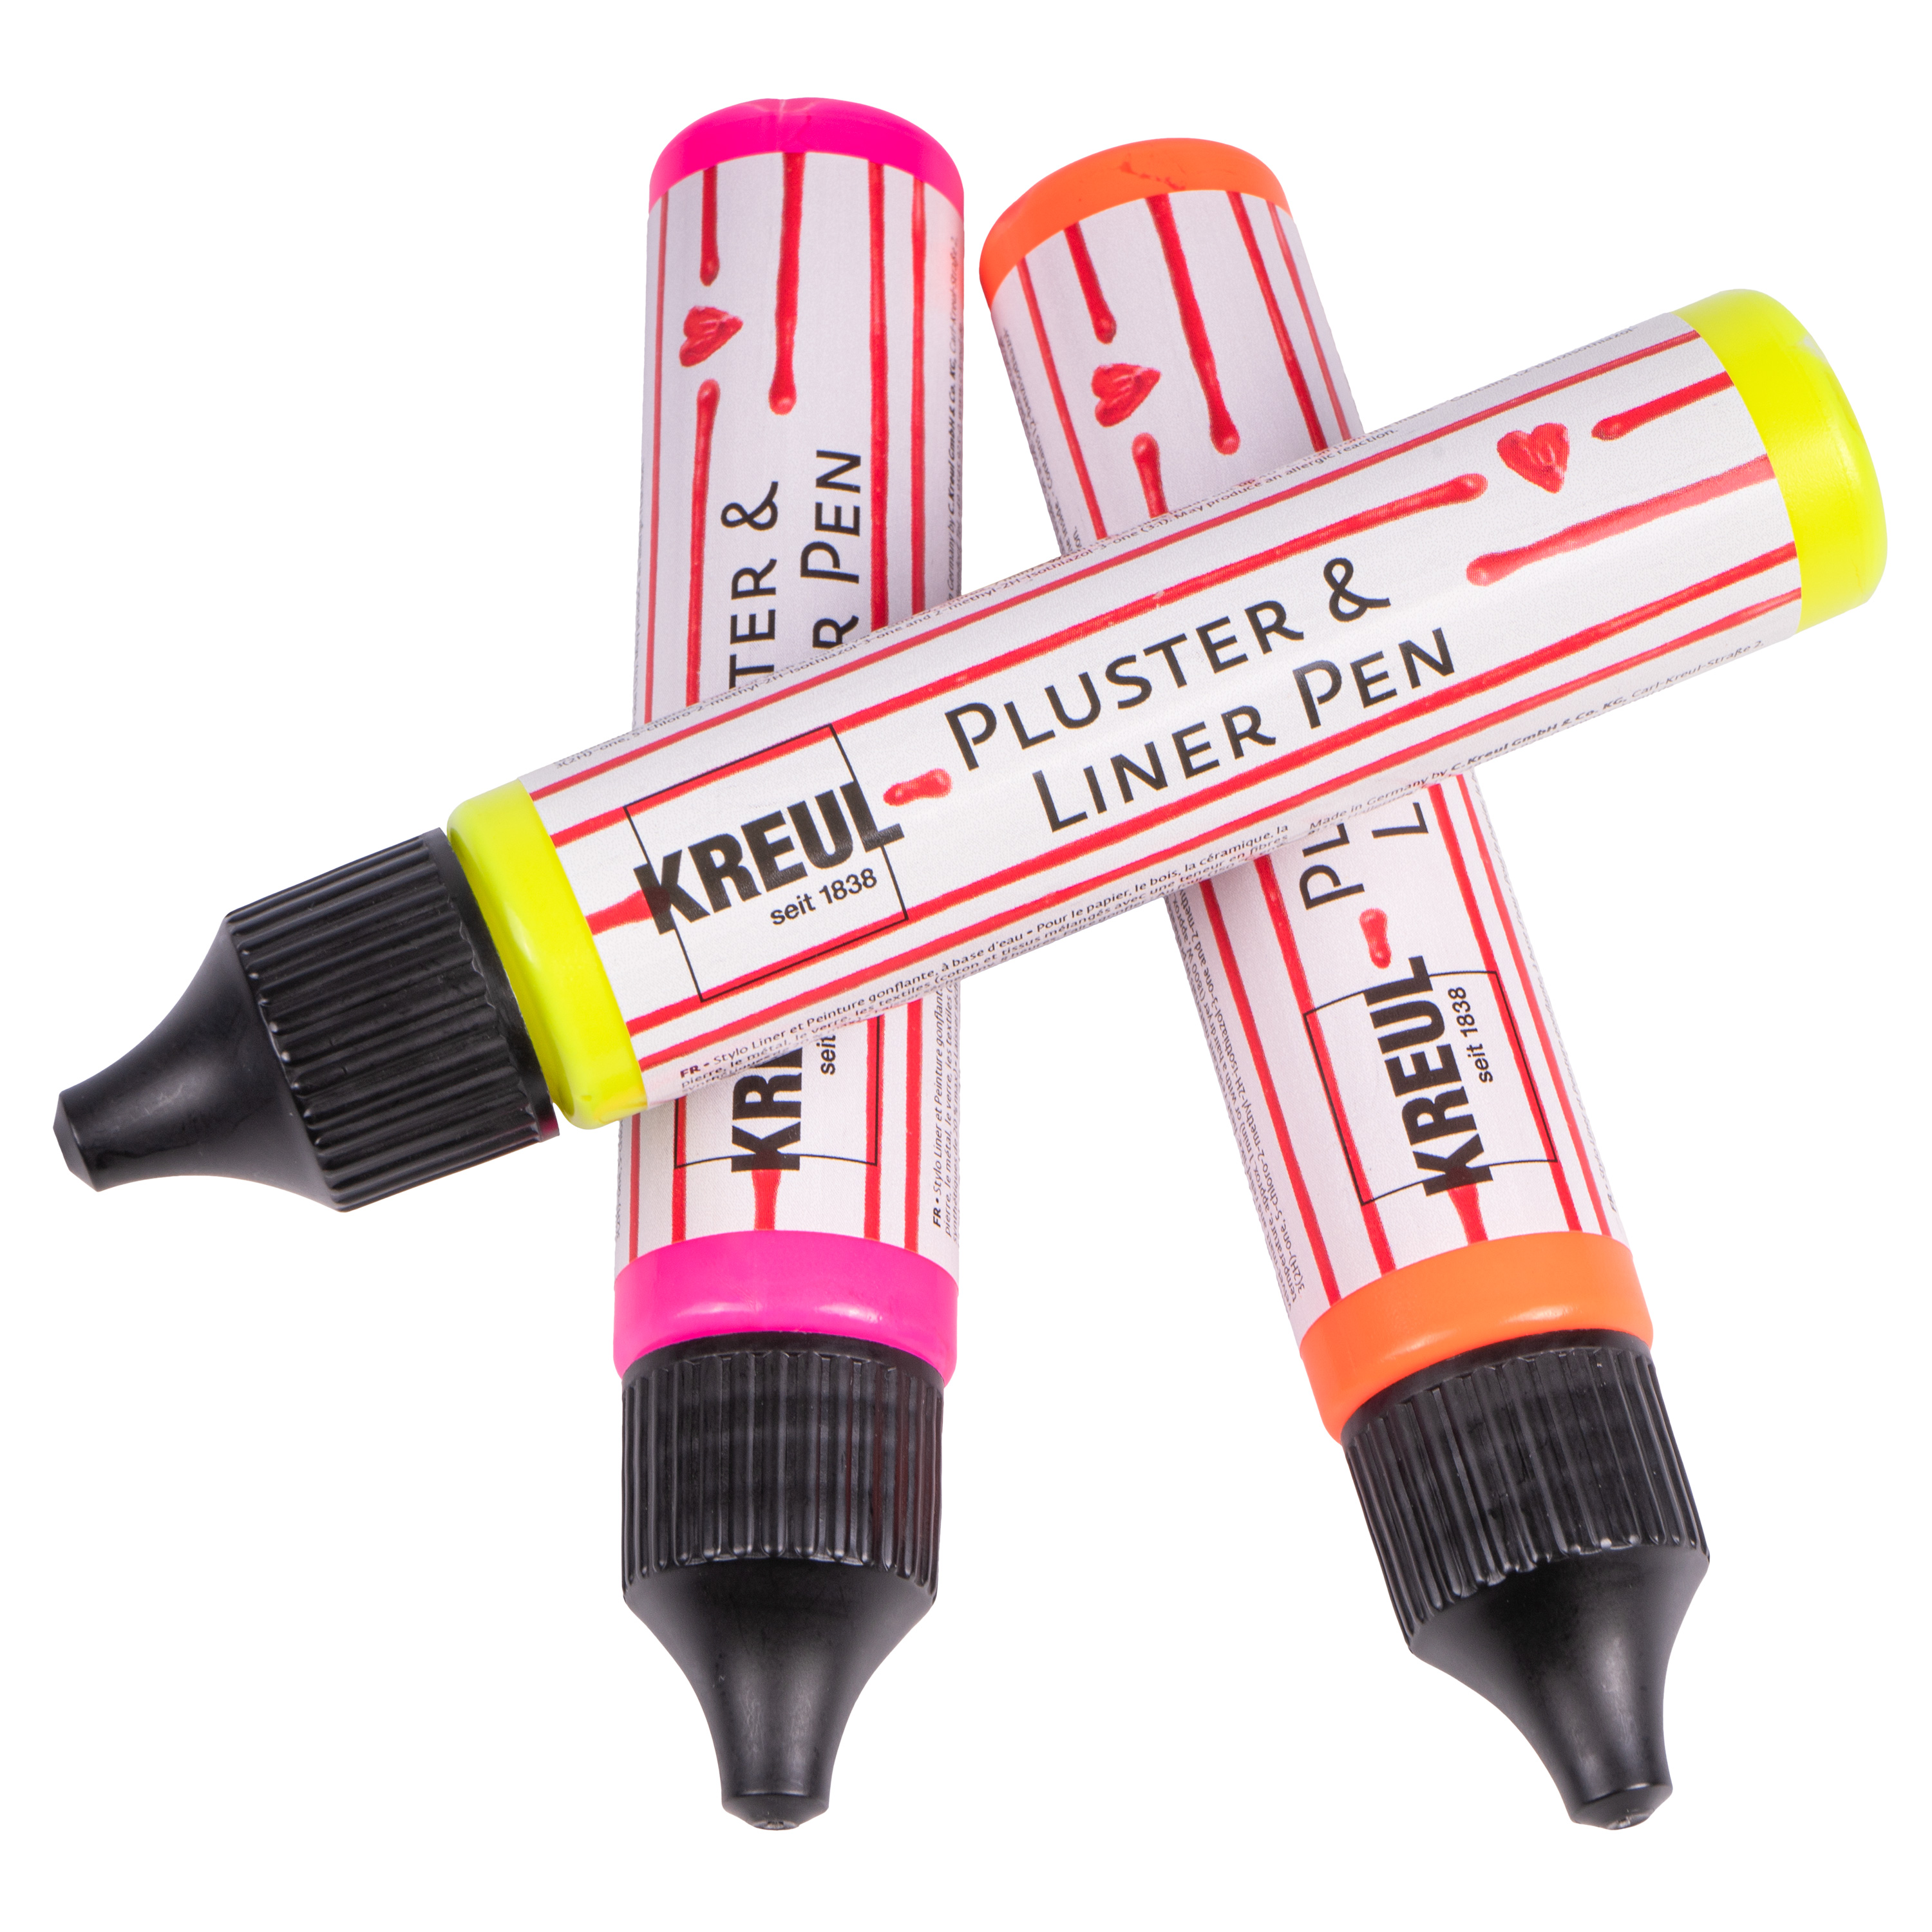 KREUL Pluster & Liner Pen, 29 ml, neongelb